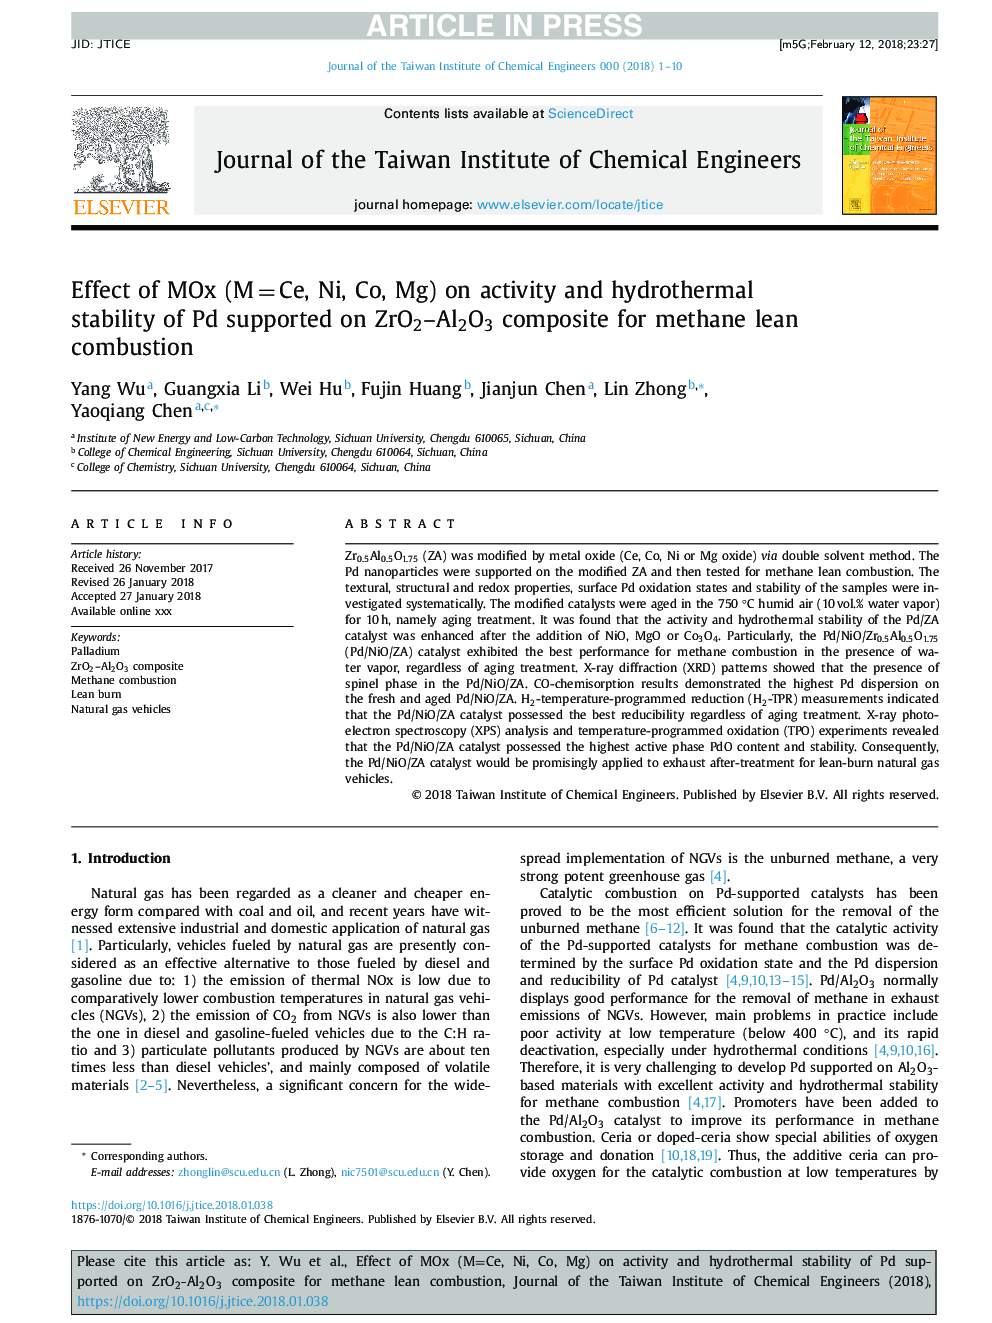 Effect of MOx (Mâ¯=â¯Ce, Ni, Co, Mg) on activity and hydrothermal stability of Pd supported on ZrO2-Al2O3 composite for methane lean combustion